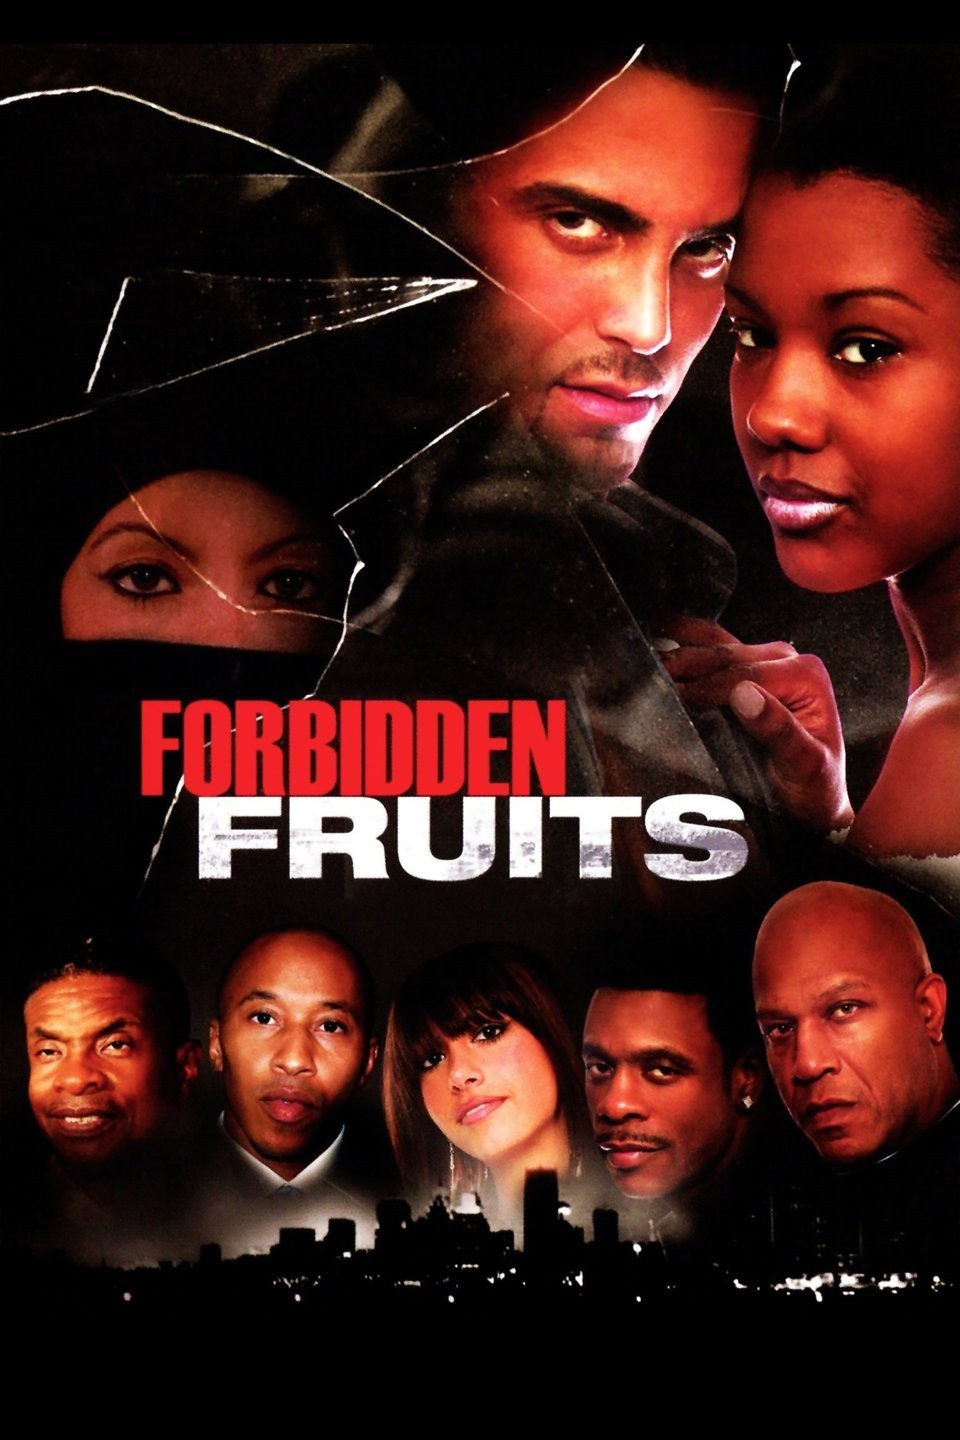 Forbidden fruits film